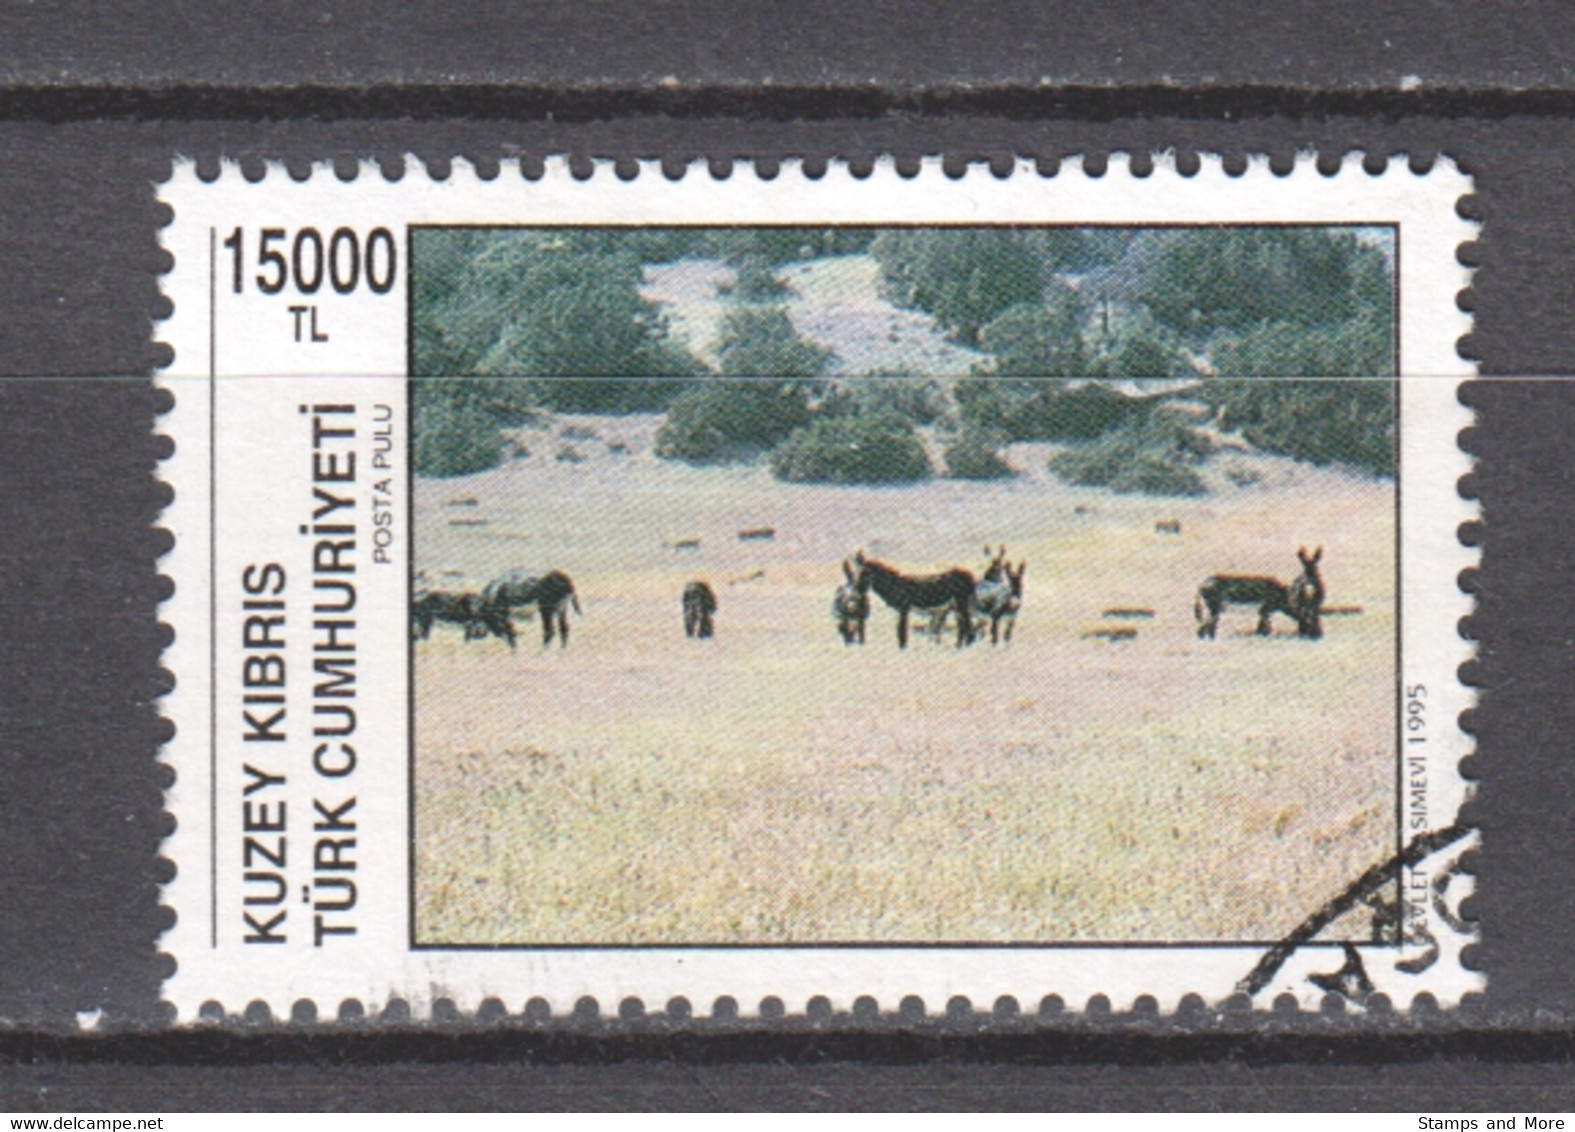 Turkish Cyprus 1995 Mi 394 Canceled (1) - Used Stamps